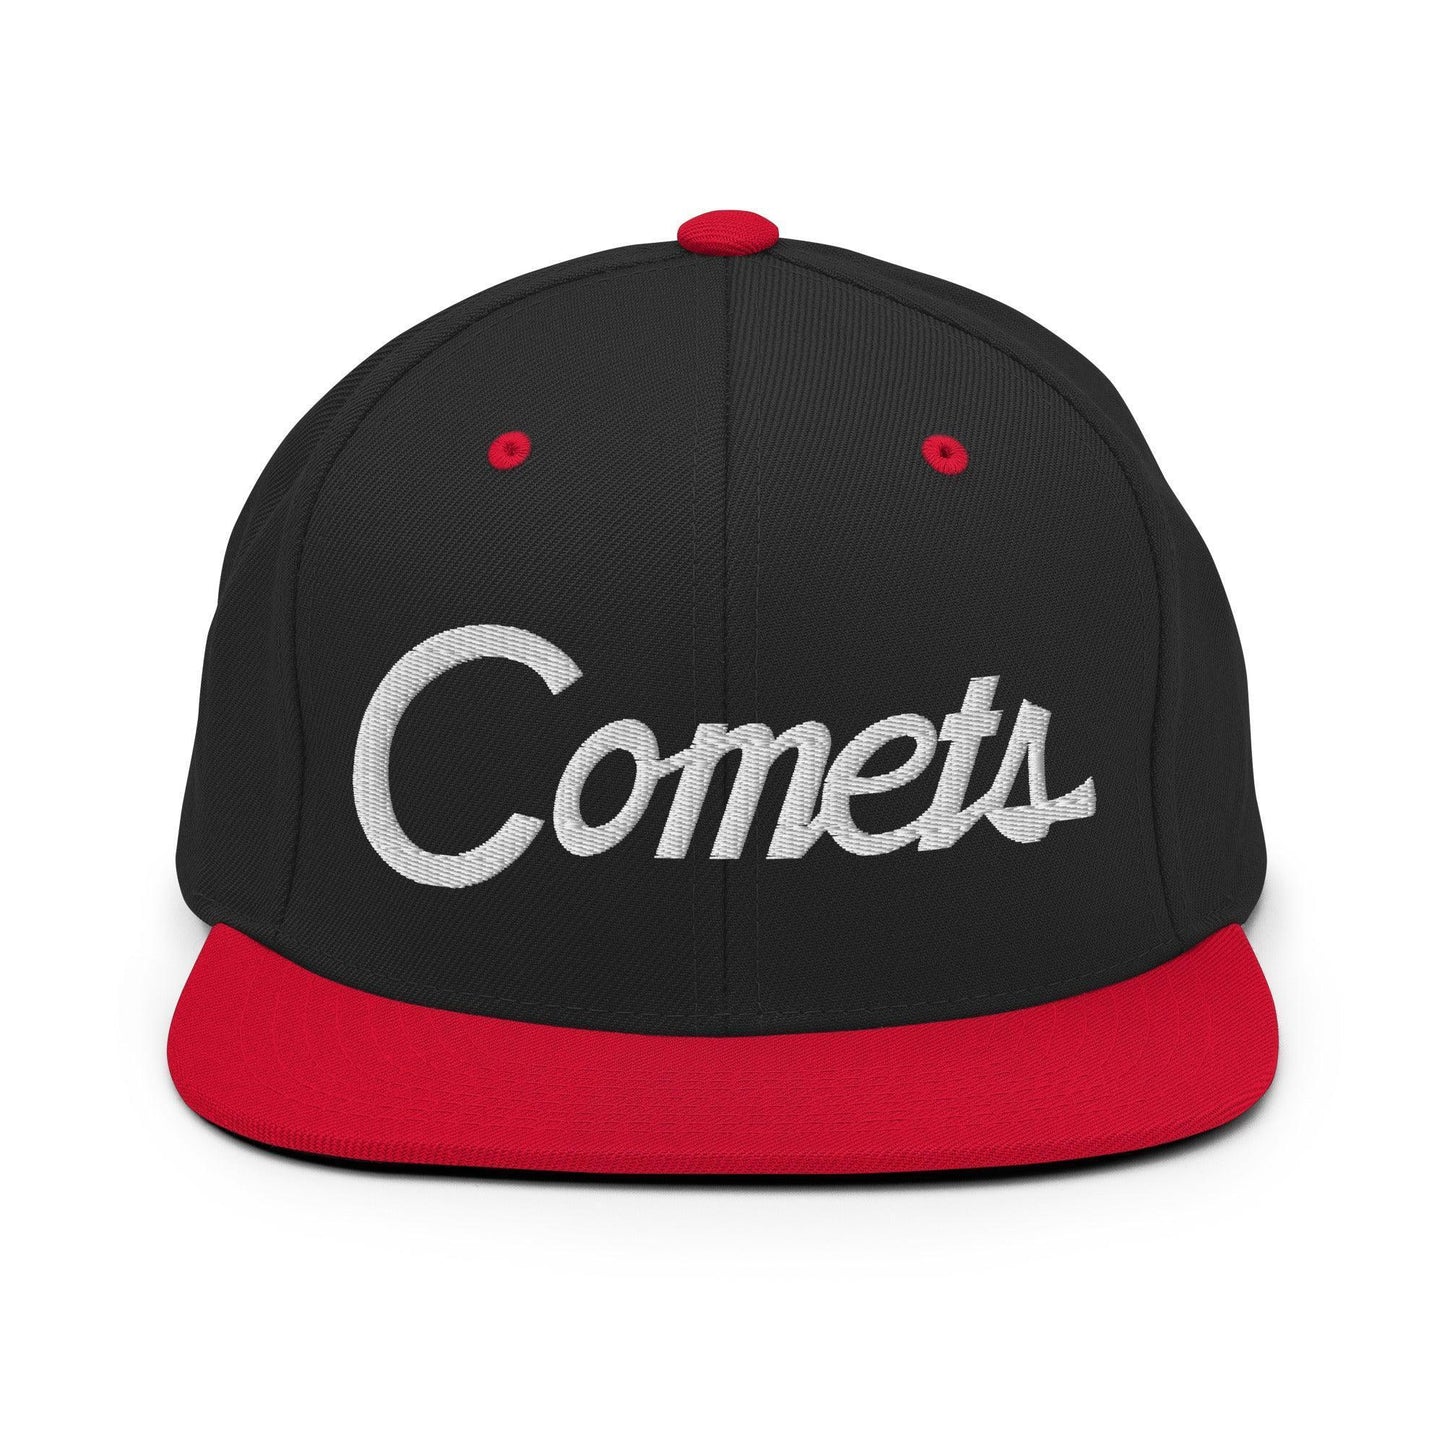 Comets School Mascot Script Snapback Hat Black/ Red